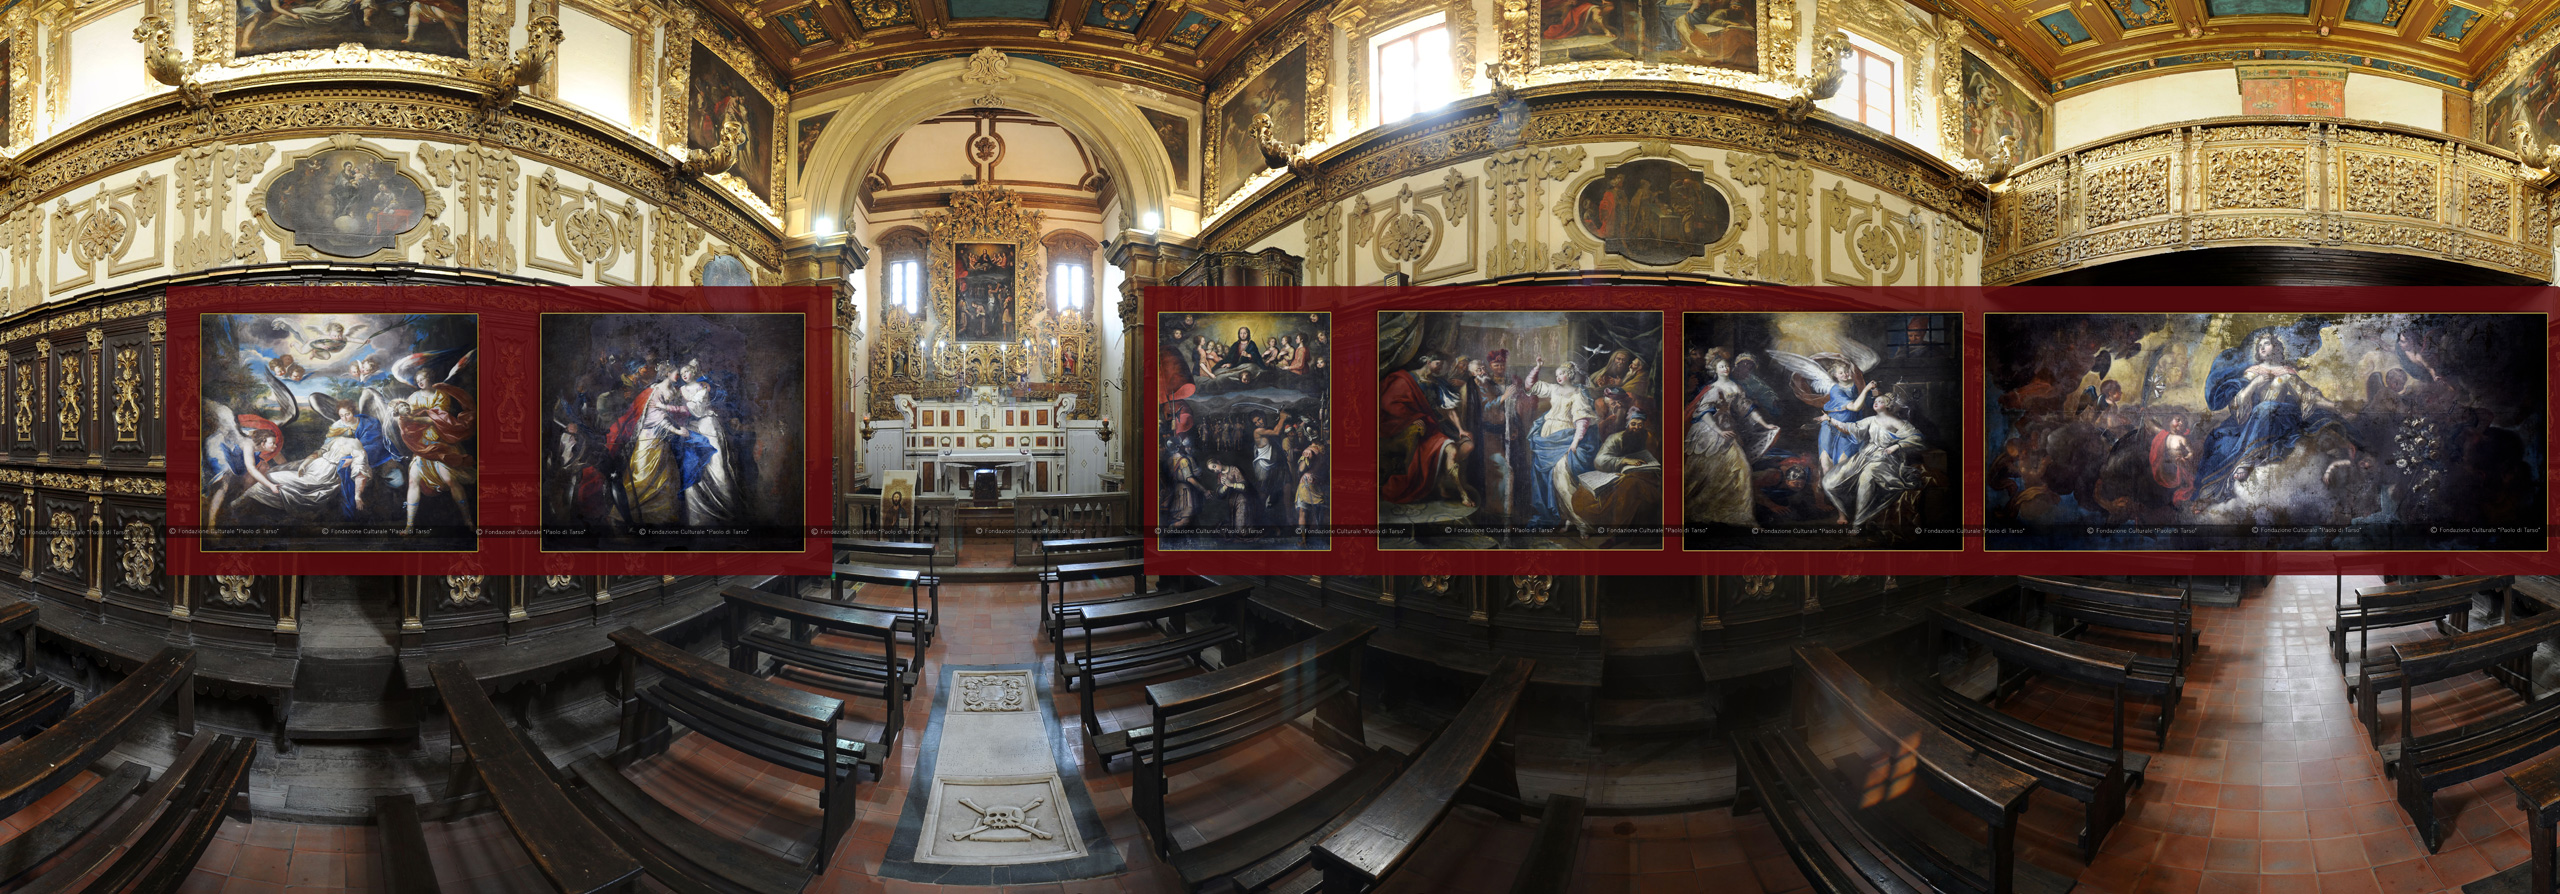 Metaverso Cosenza - Musei Digitali Cappella S. Caterina D'Alessandria Chiesa San Francesco di Assisi